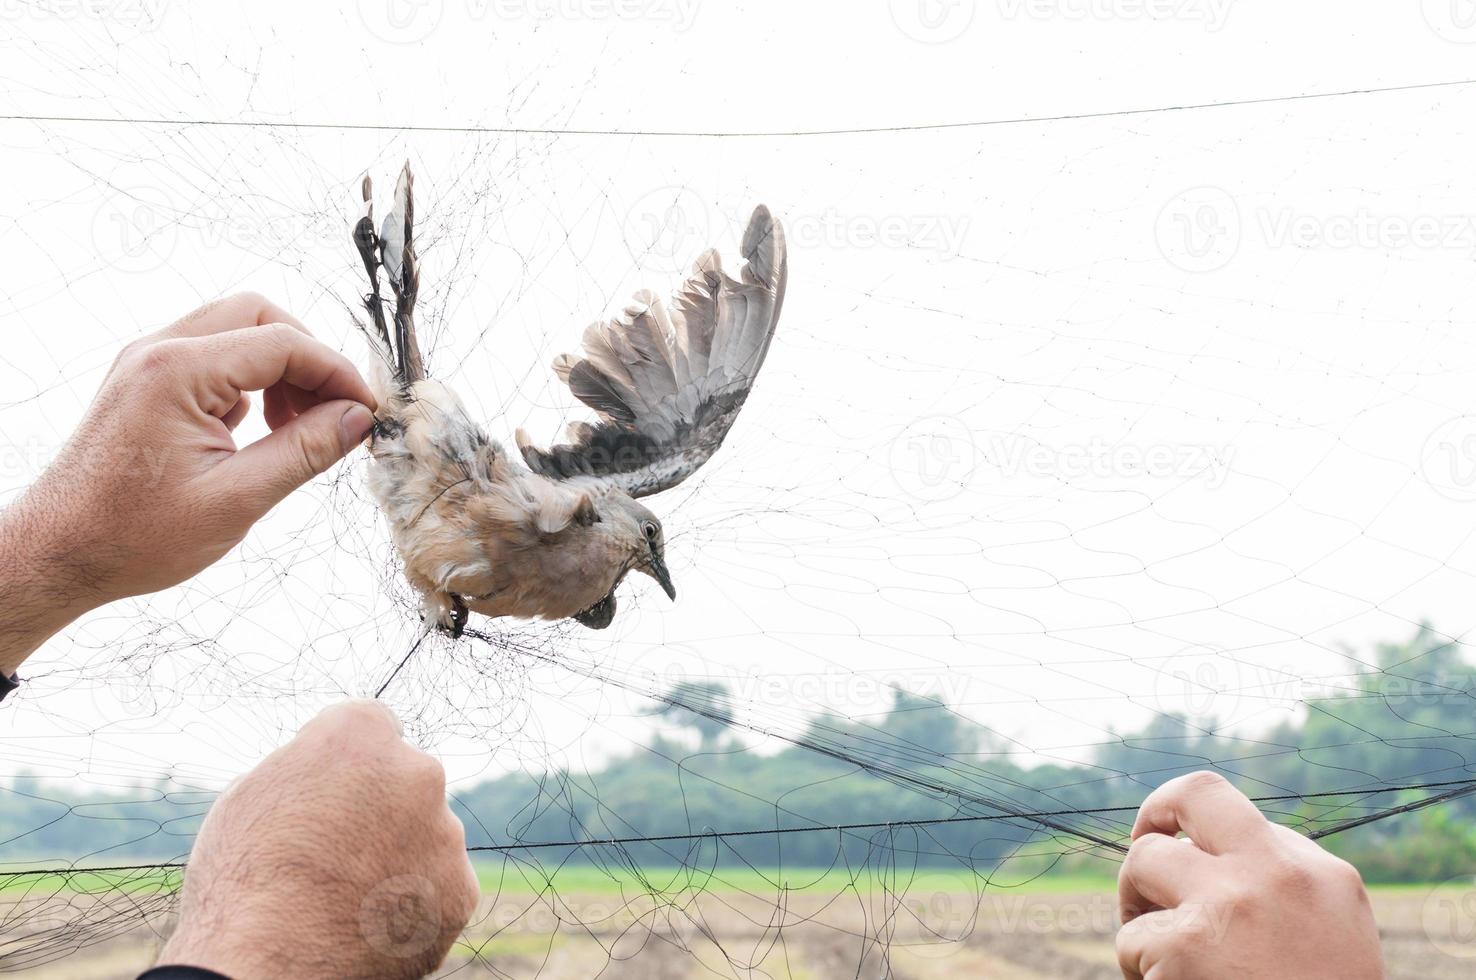 Bird were caught by gardener hand holding on a mesh on white background,Illegal Bird Trap photo